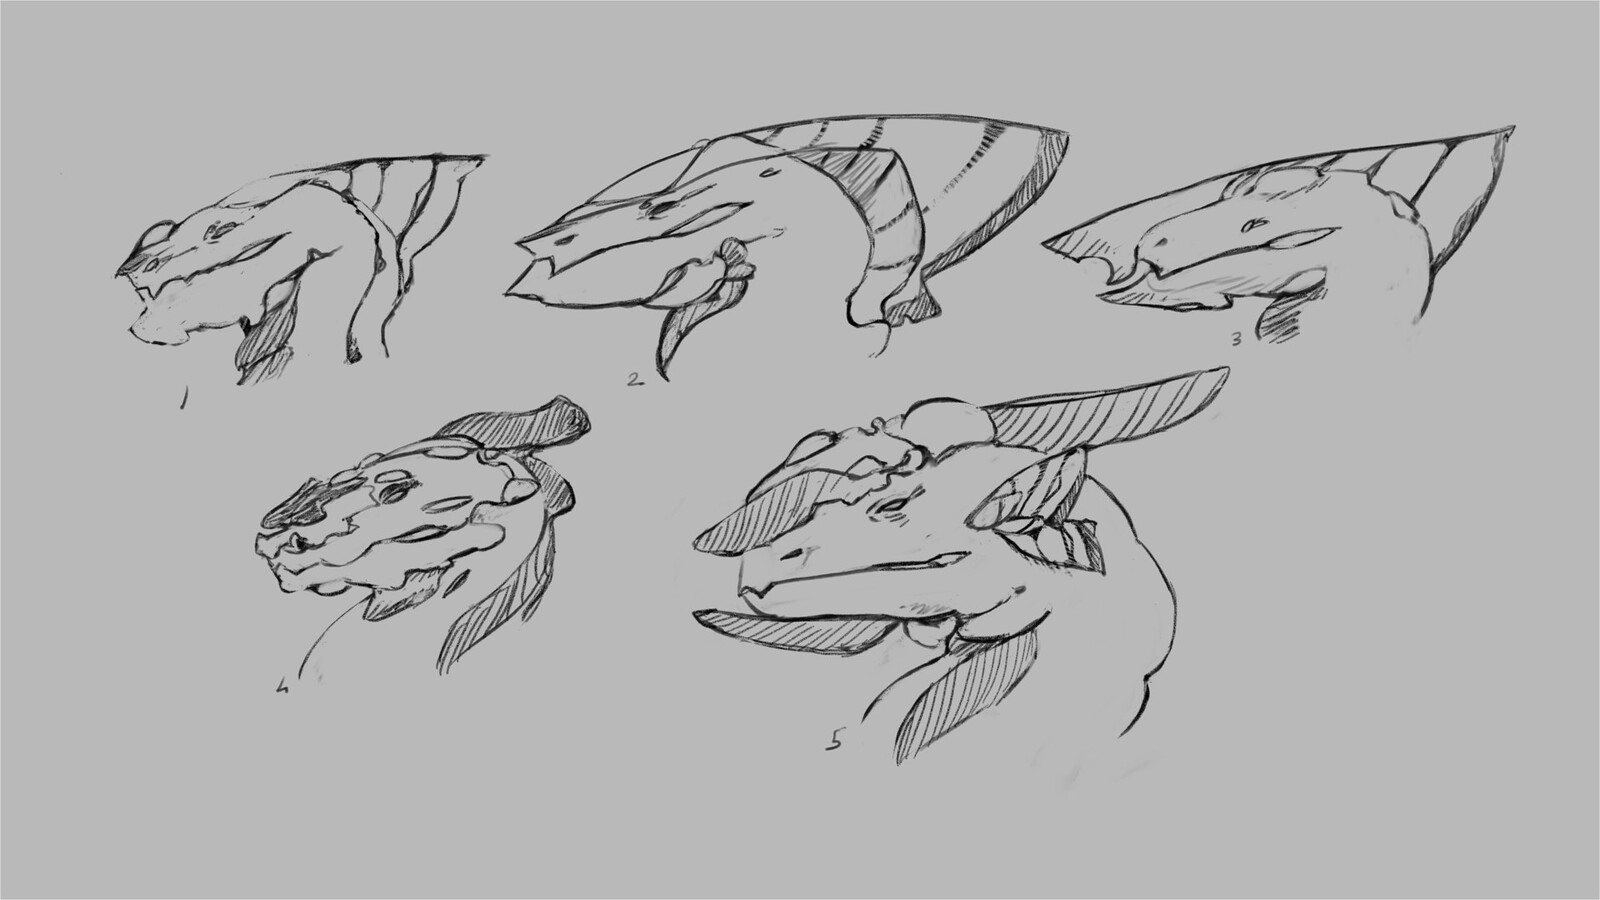 Some dragon head sketches...